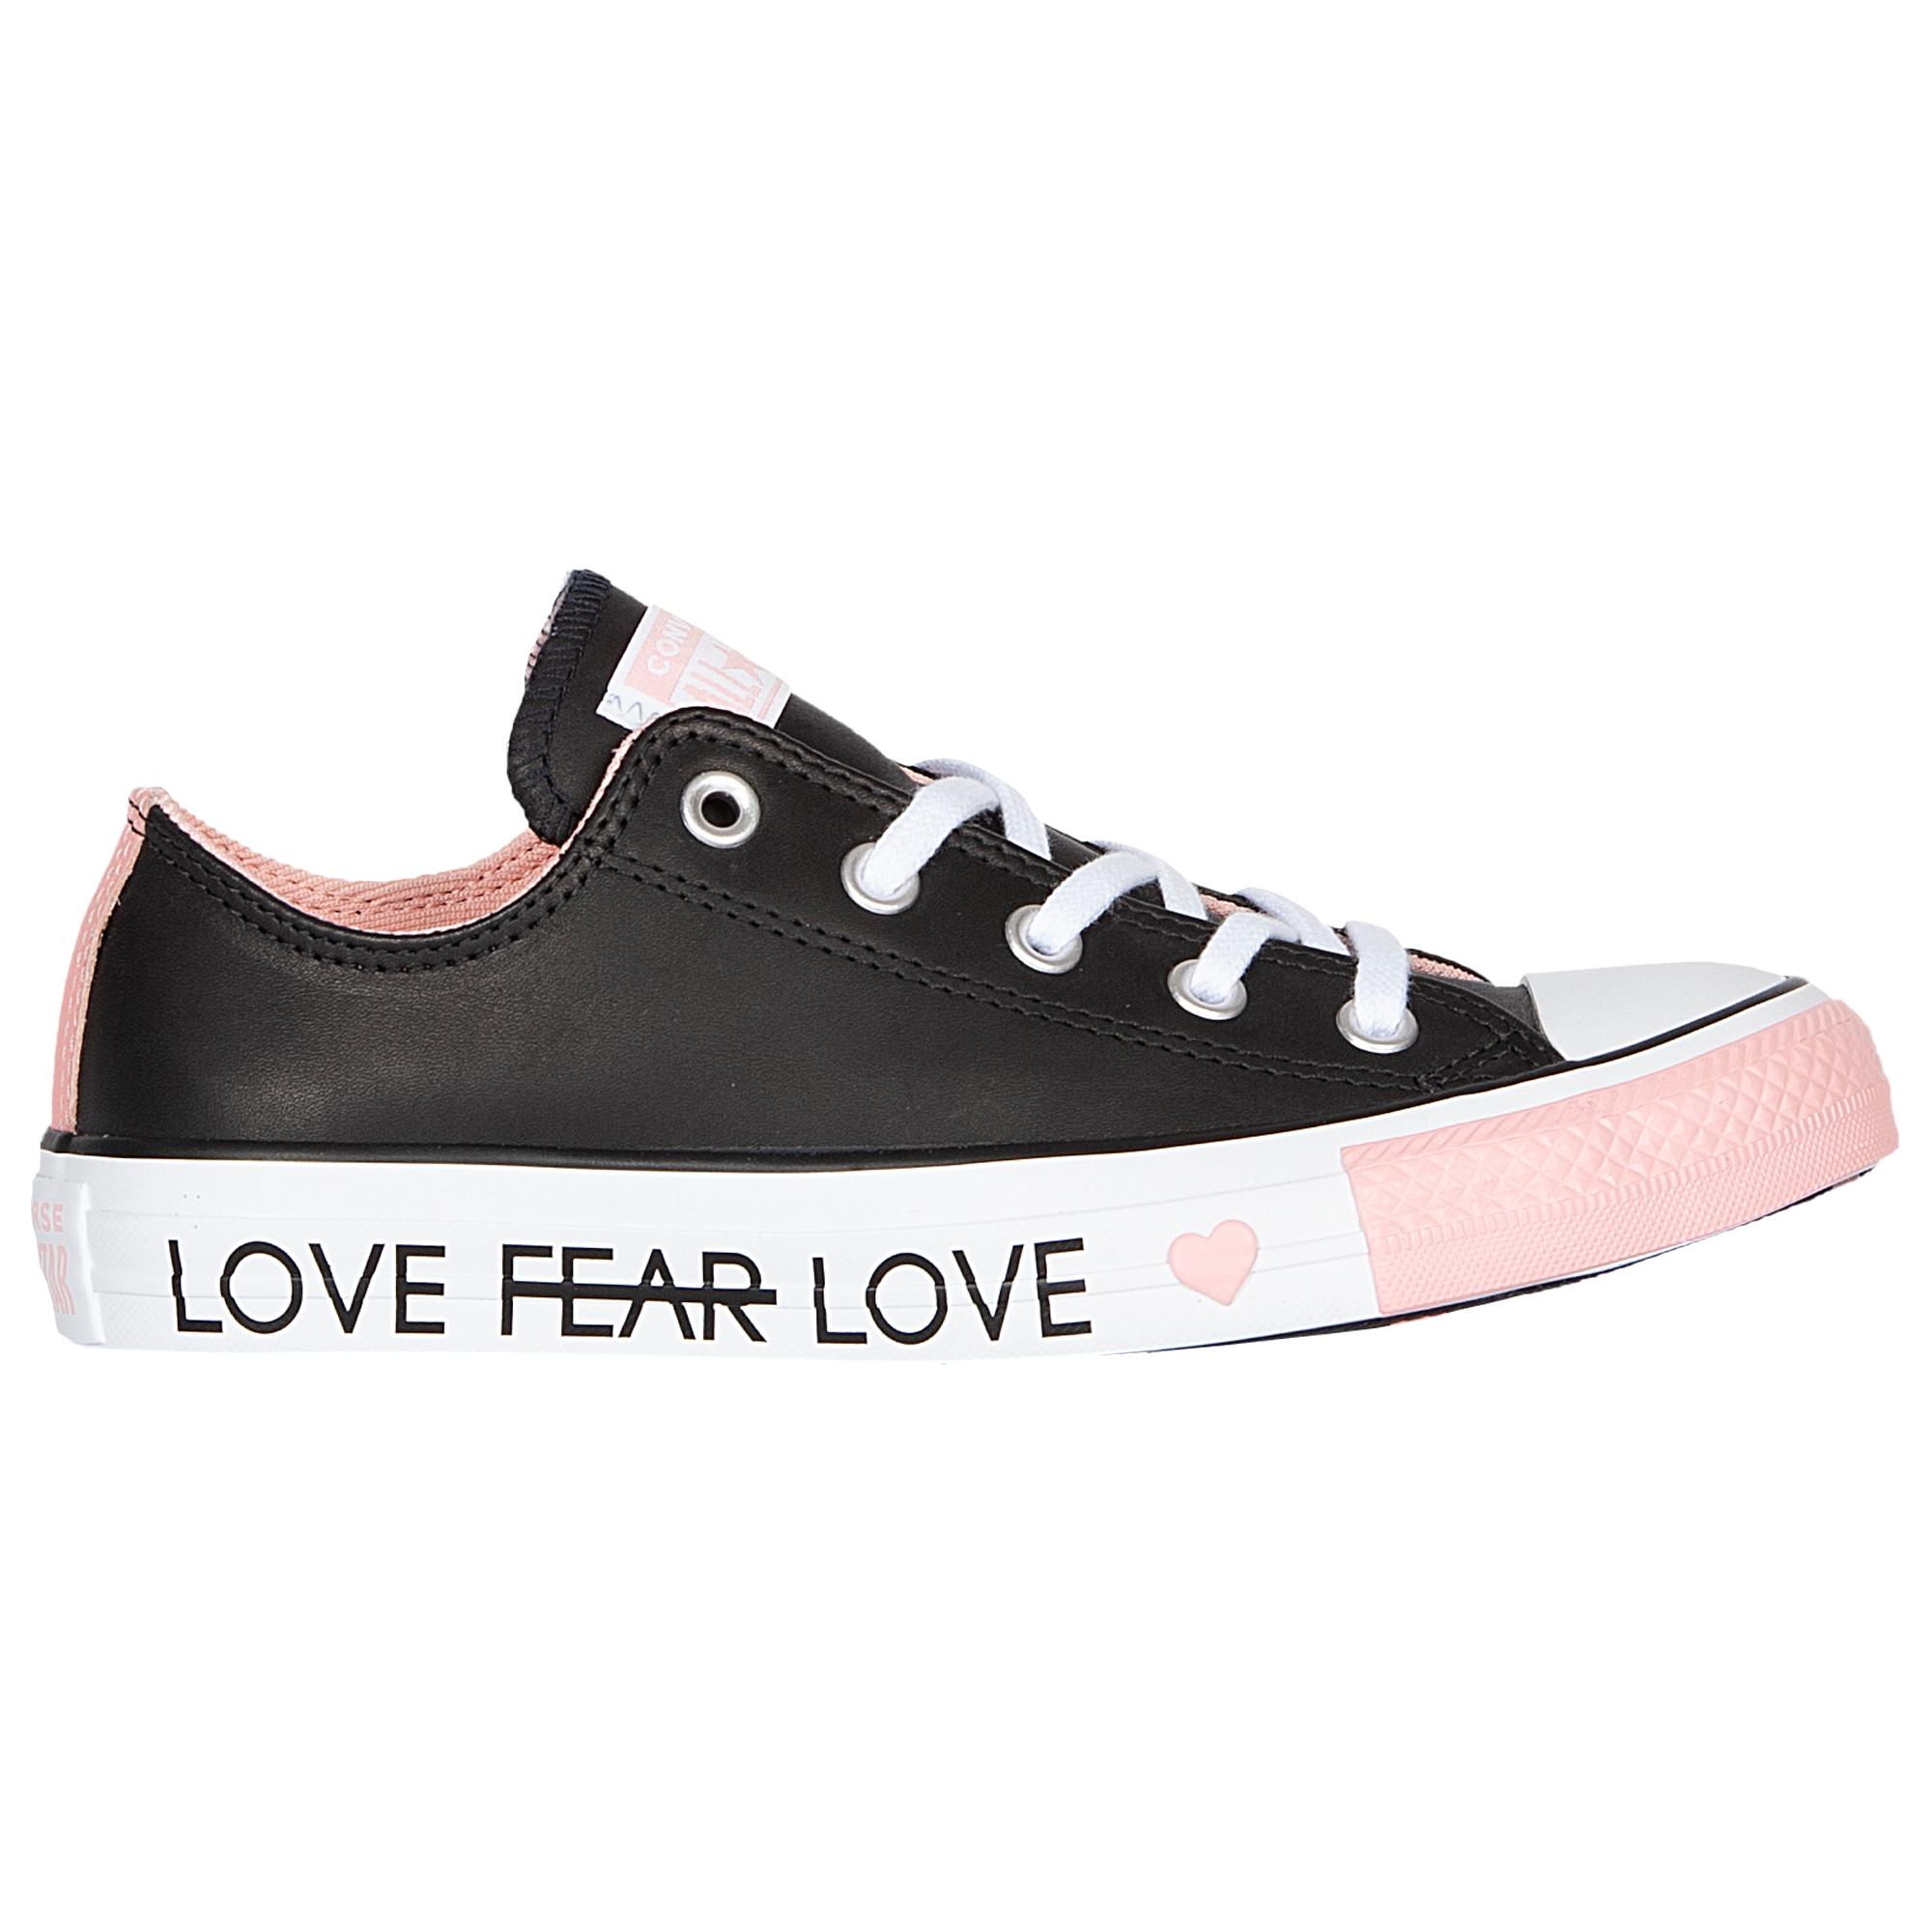 converse chuck taylor fear love